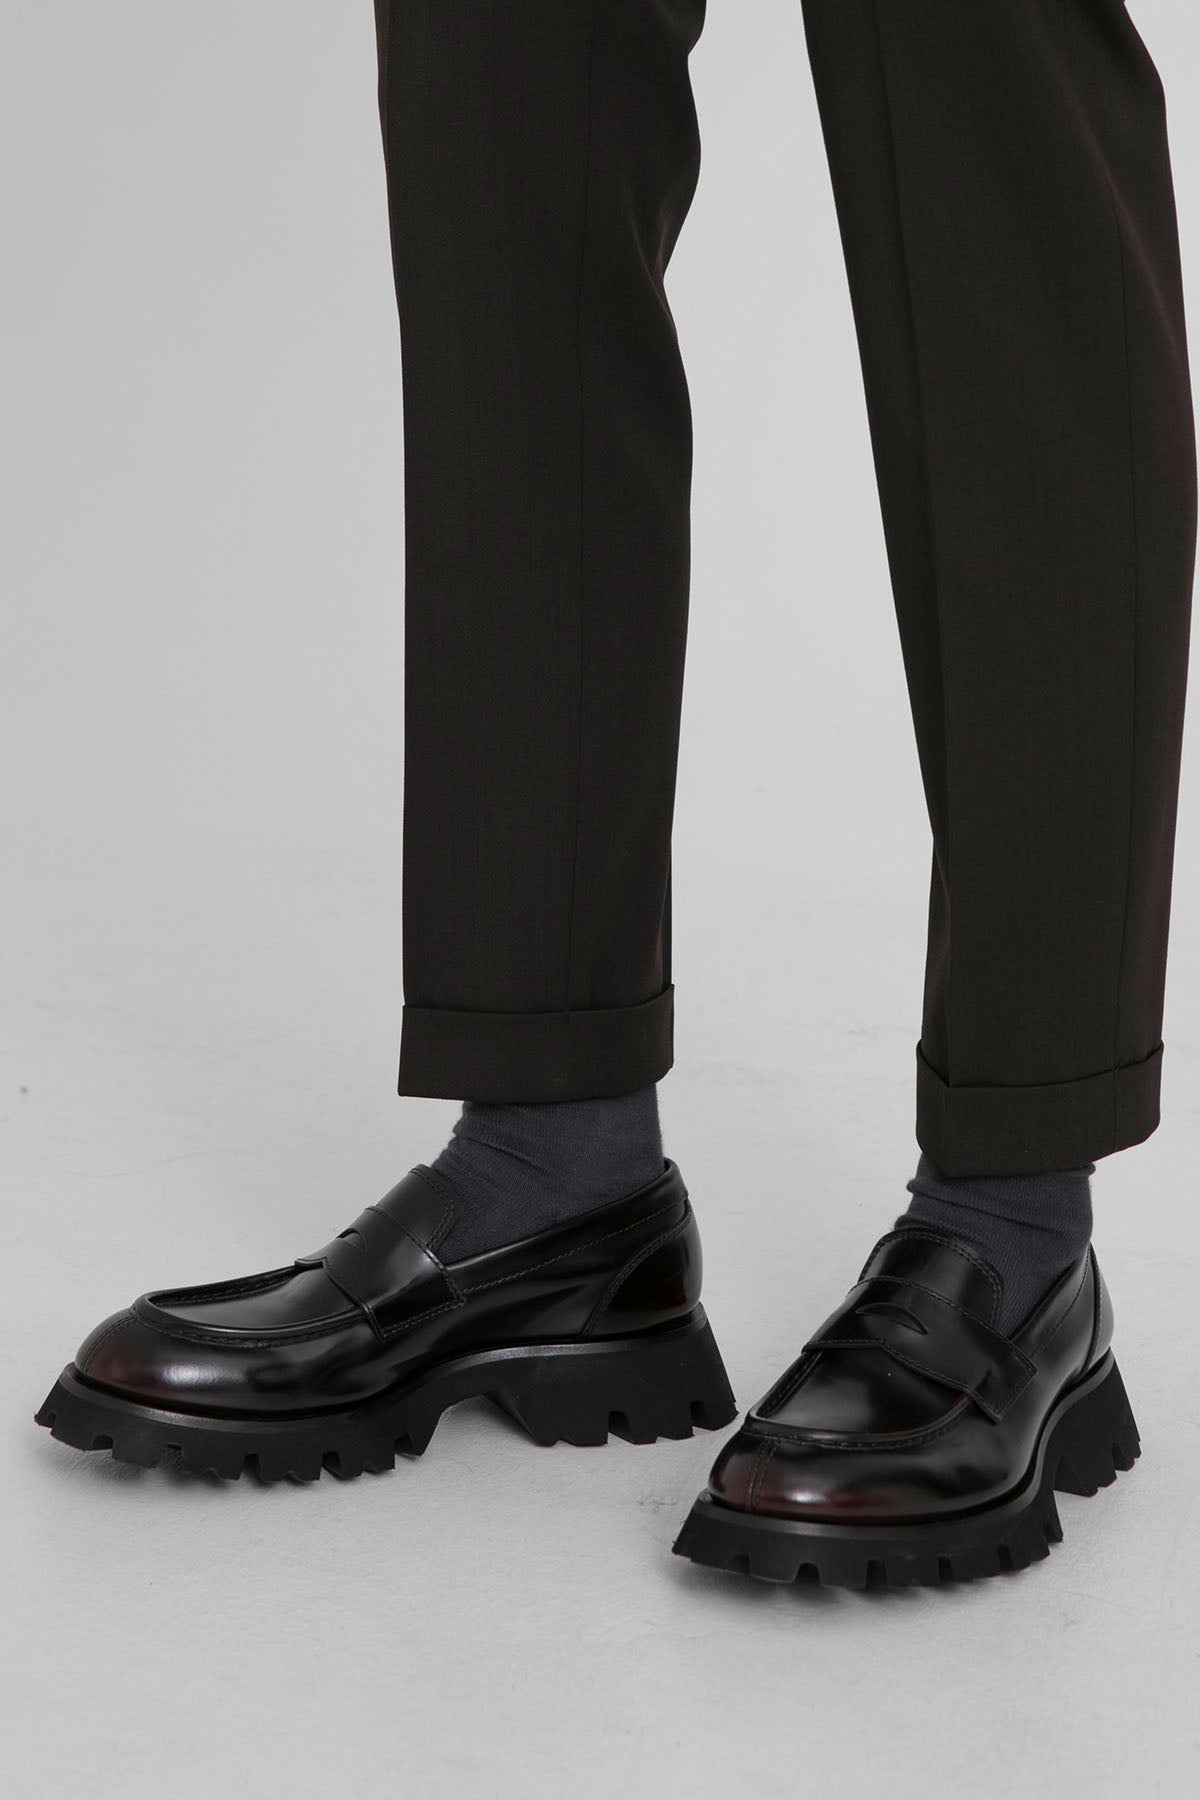 Pantaloni Torino Master Fit Streç Yün Pantolon-Libas Trendy Fashion Store